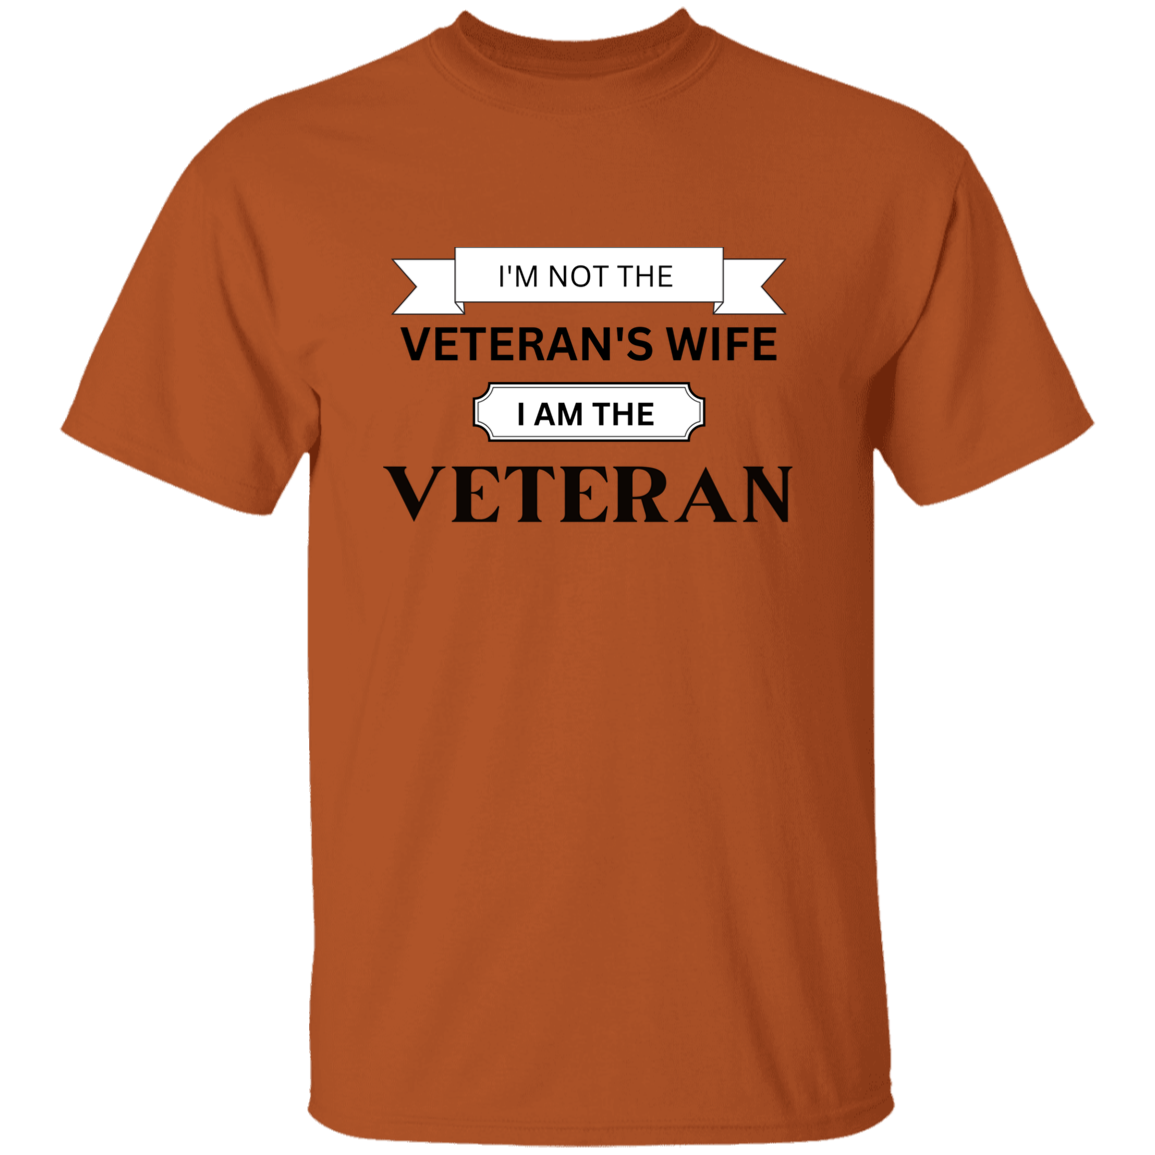 I'm Not the Veteran's Wife - I am the Veteran T-Shirt